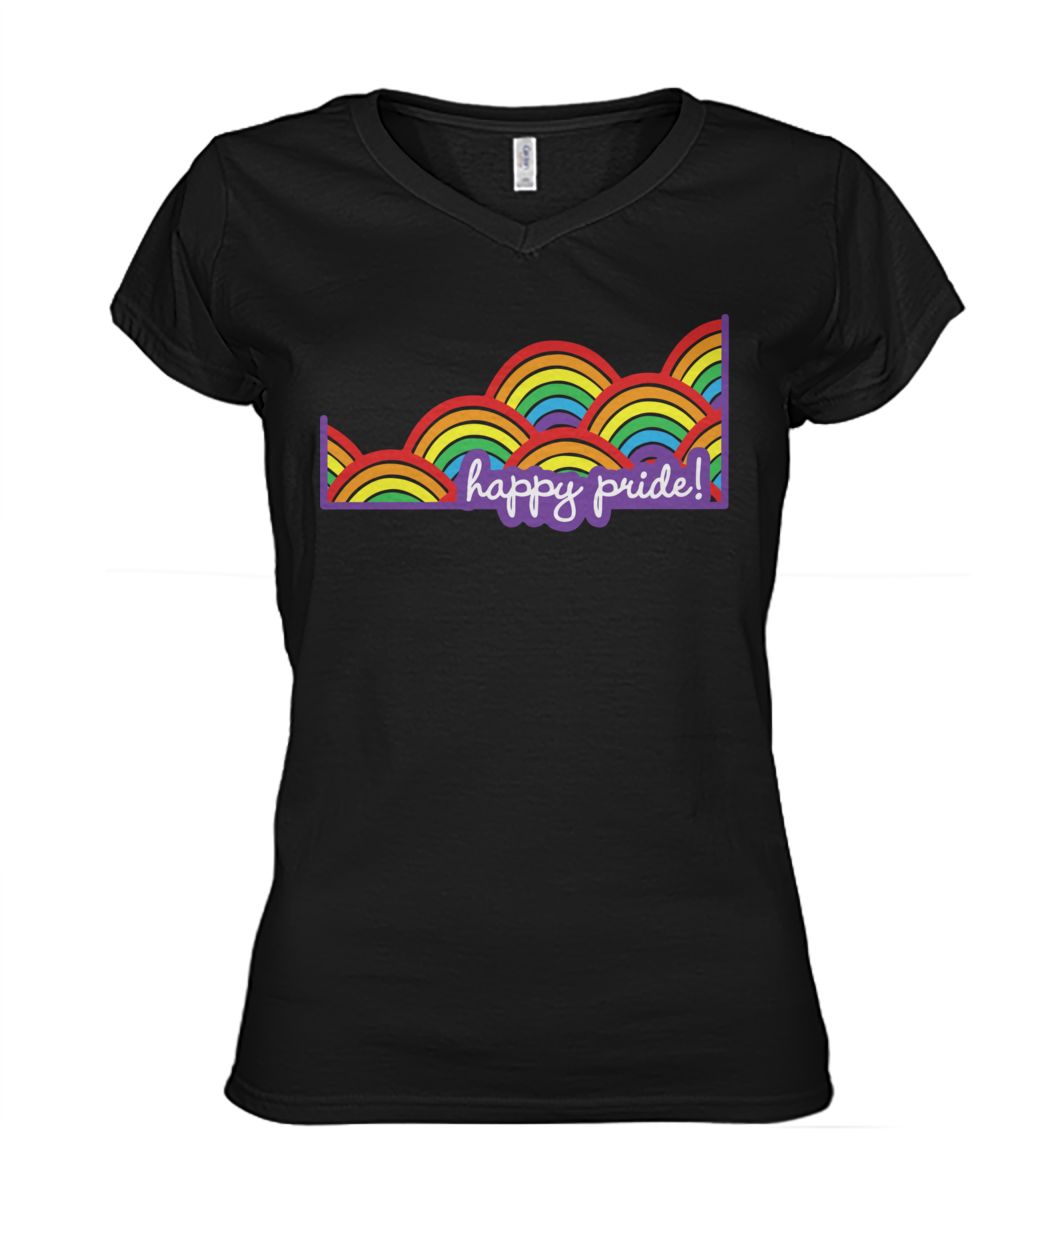 LGBT happy pride rainbow flag women's v-neck